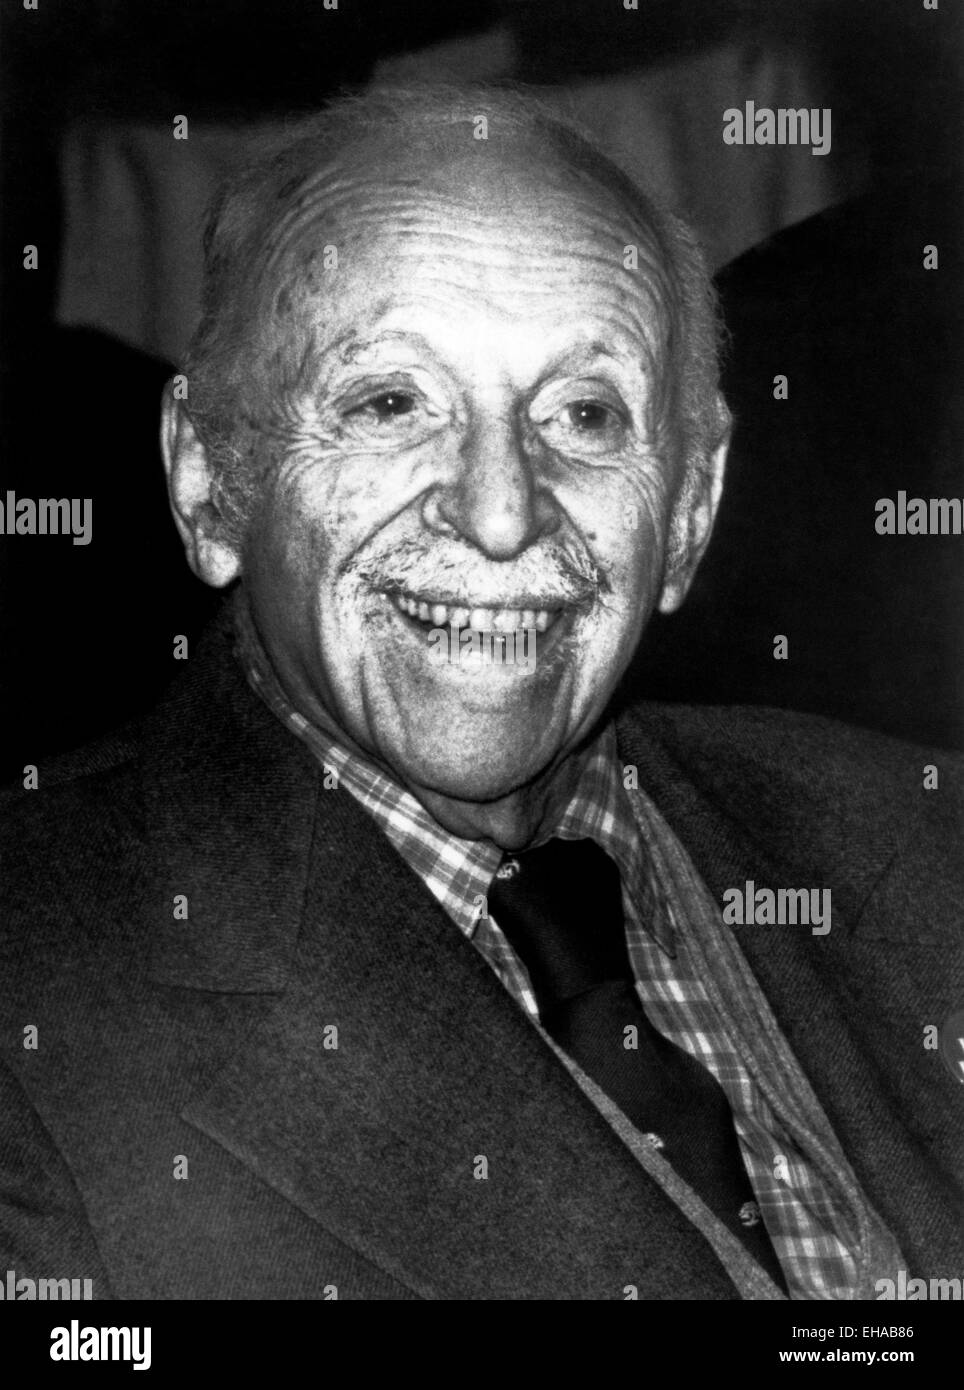 Edward Bernays, Public Relations Pioneer, Portrait, circa 1980's Stock Photo